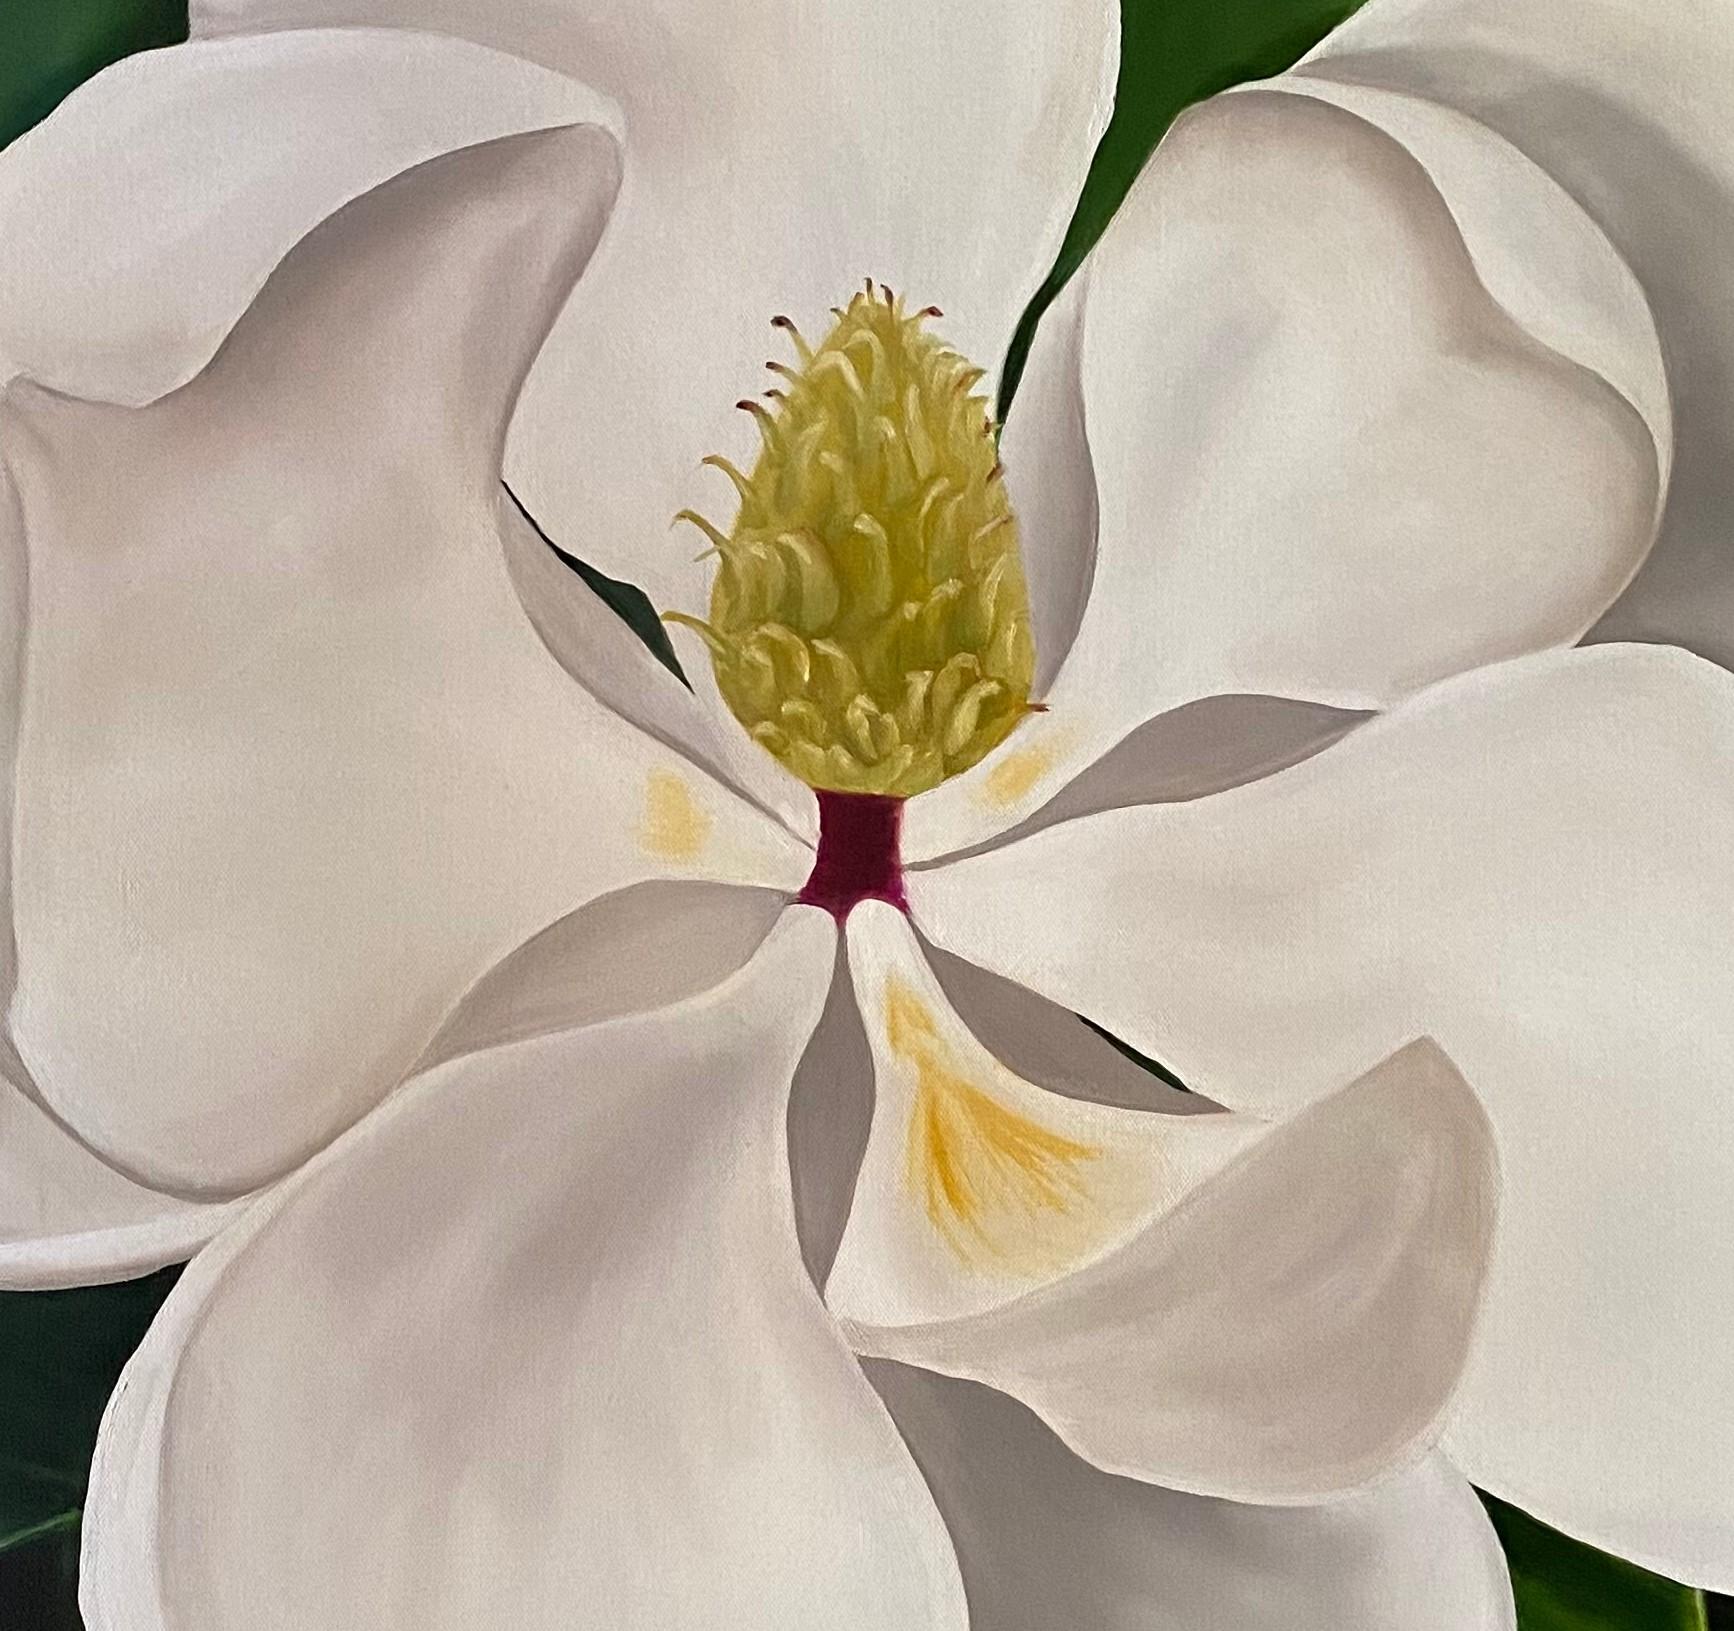 giant magnolia flower